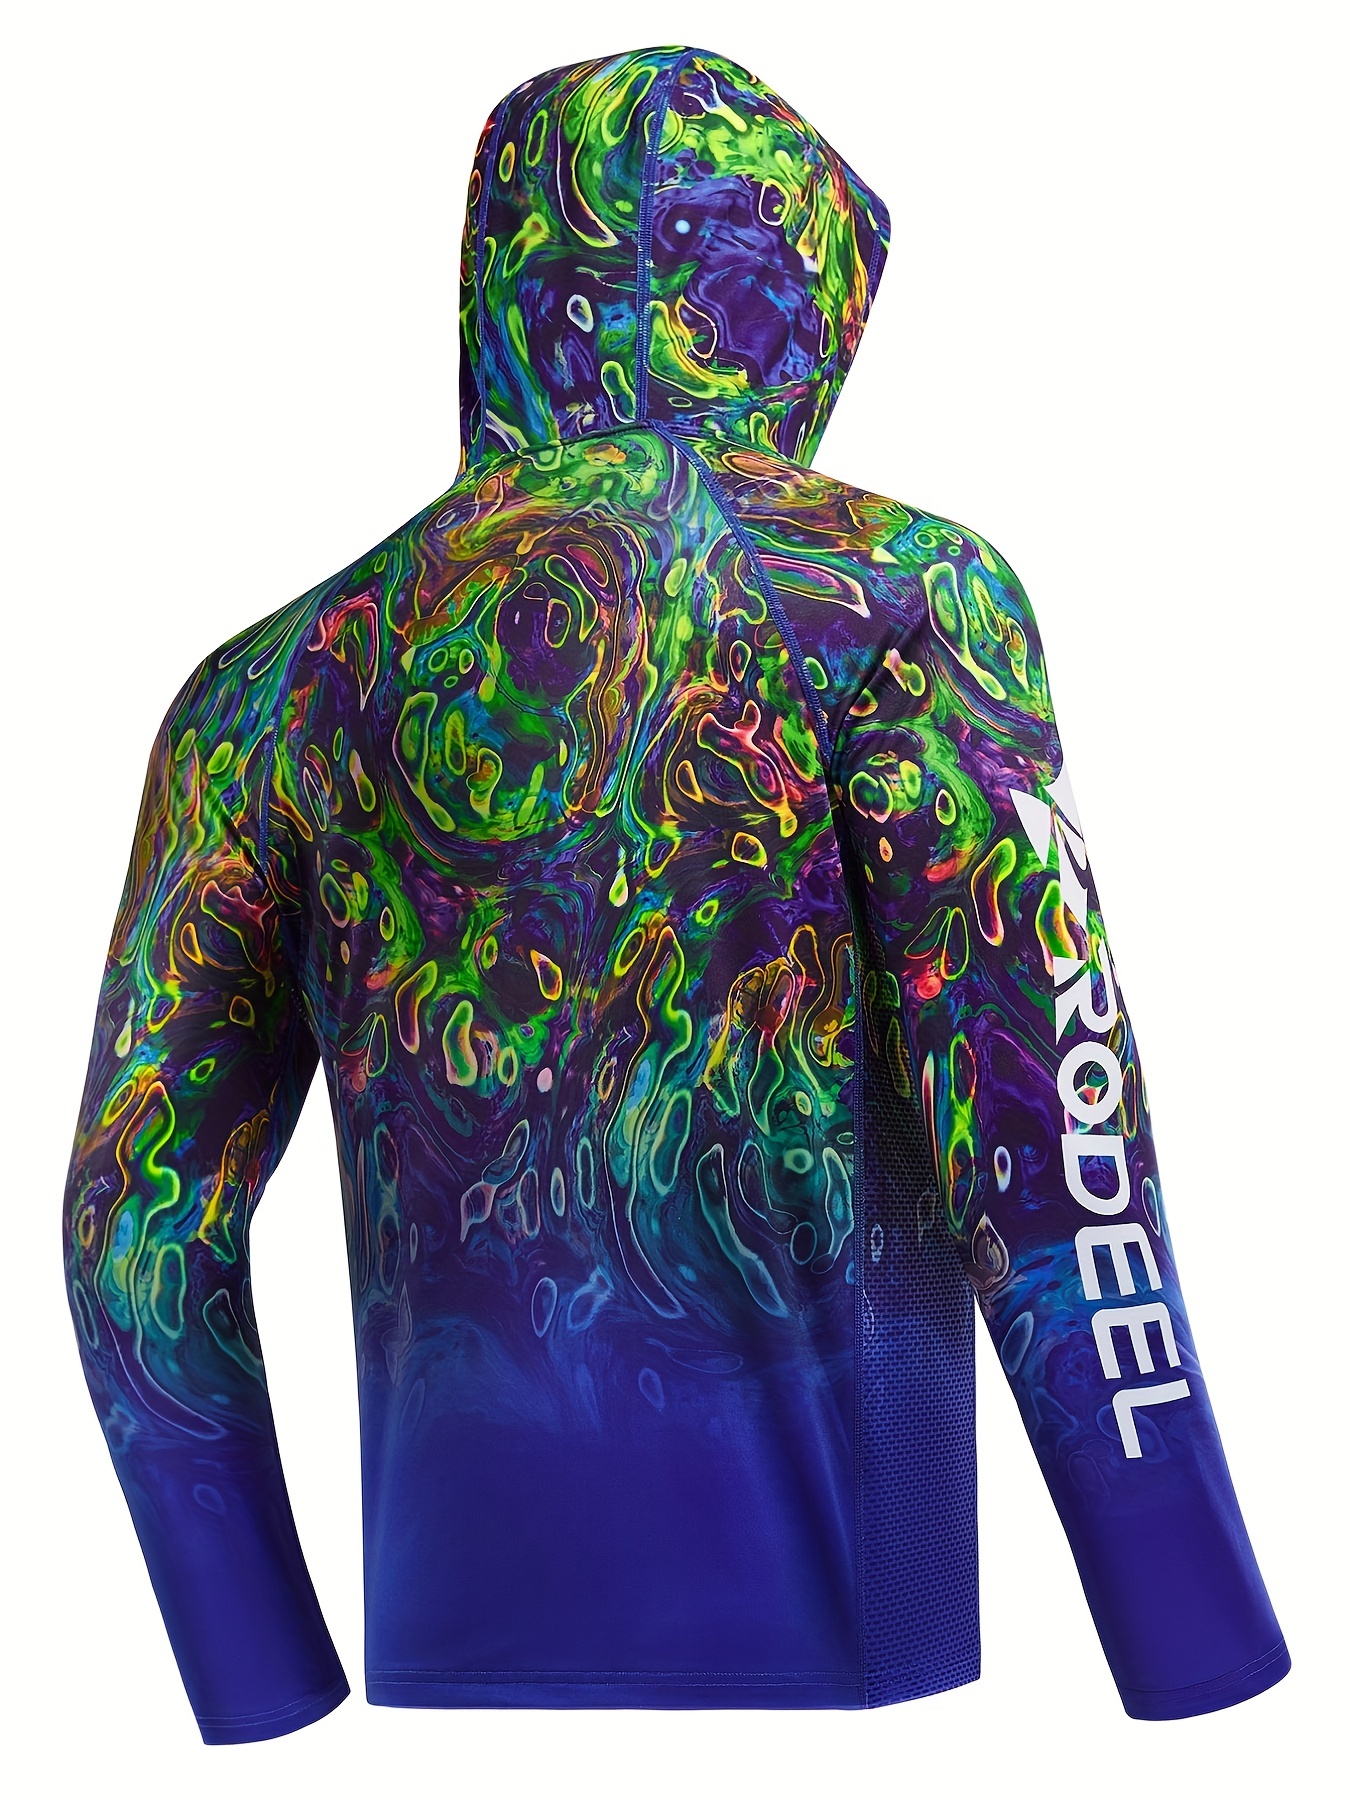 Redfish, Trout, Flounder Scale Custom UV Protection Fishing Shirt, Fish Hook Design Jerseys IPHW5068 Kid Long Sleeves UPF / 2XL